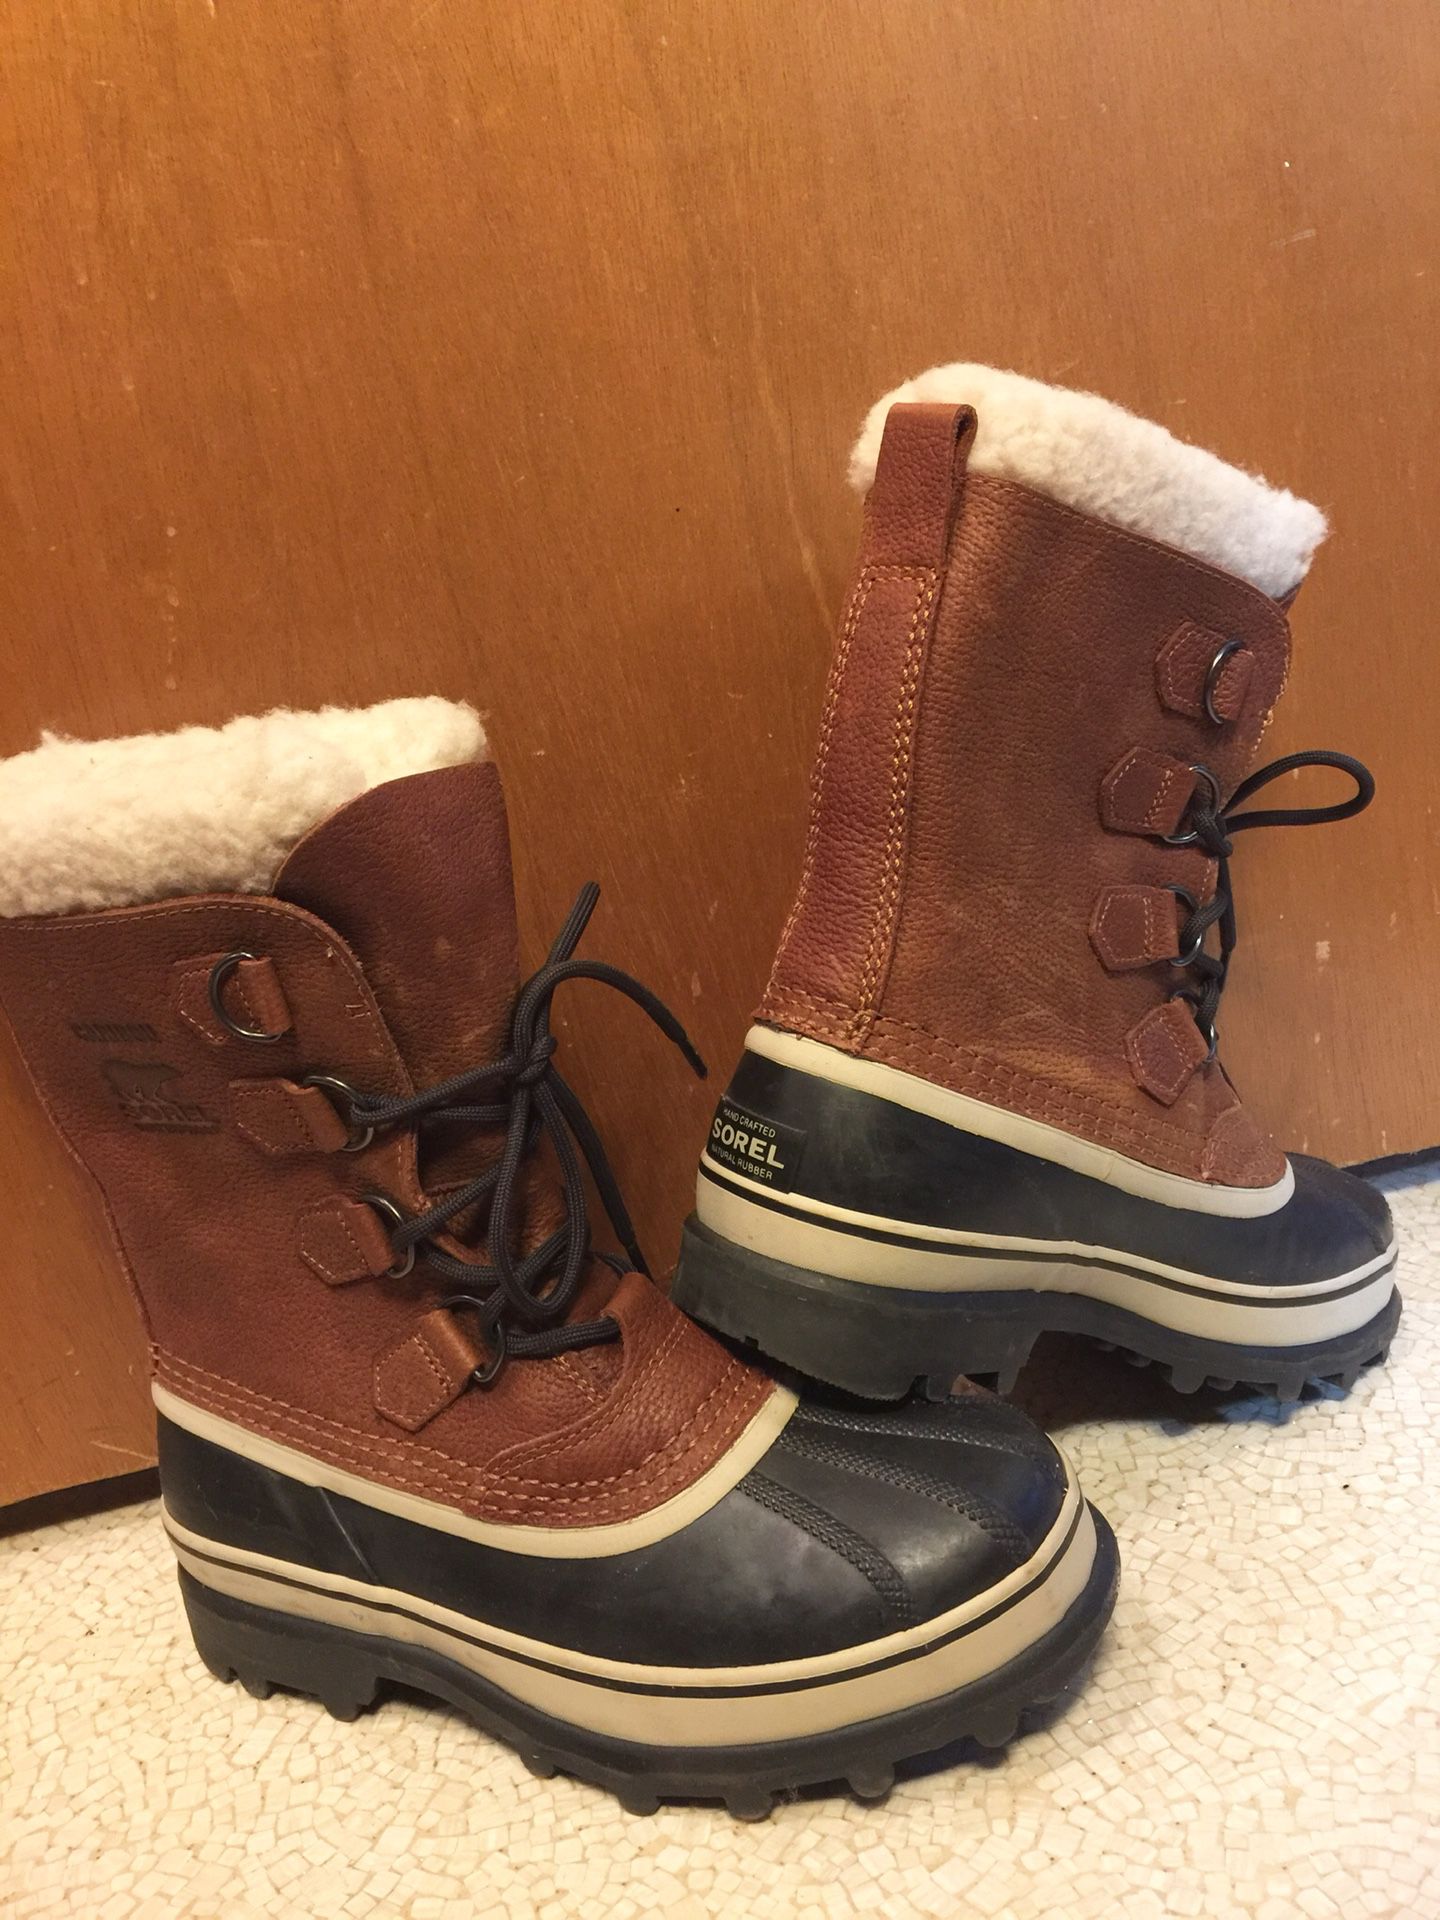 Sorel Caribou Boots Women 8 - Like New - Winter/Snow